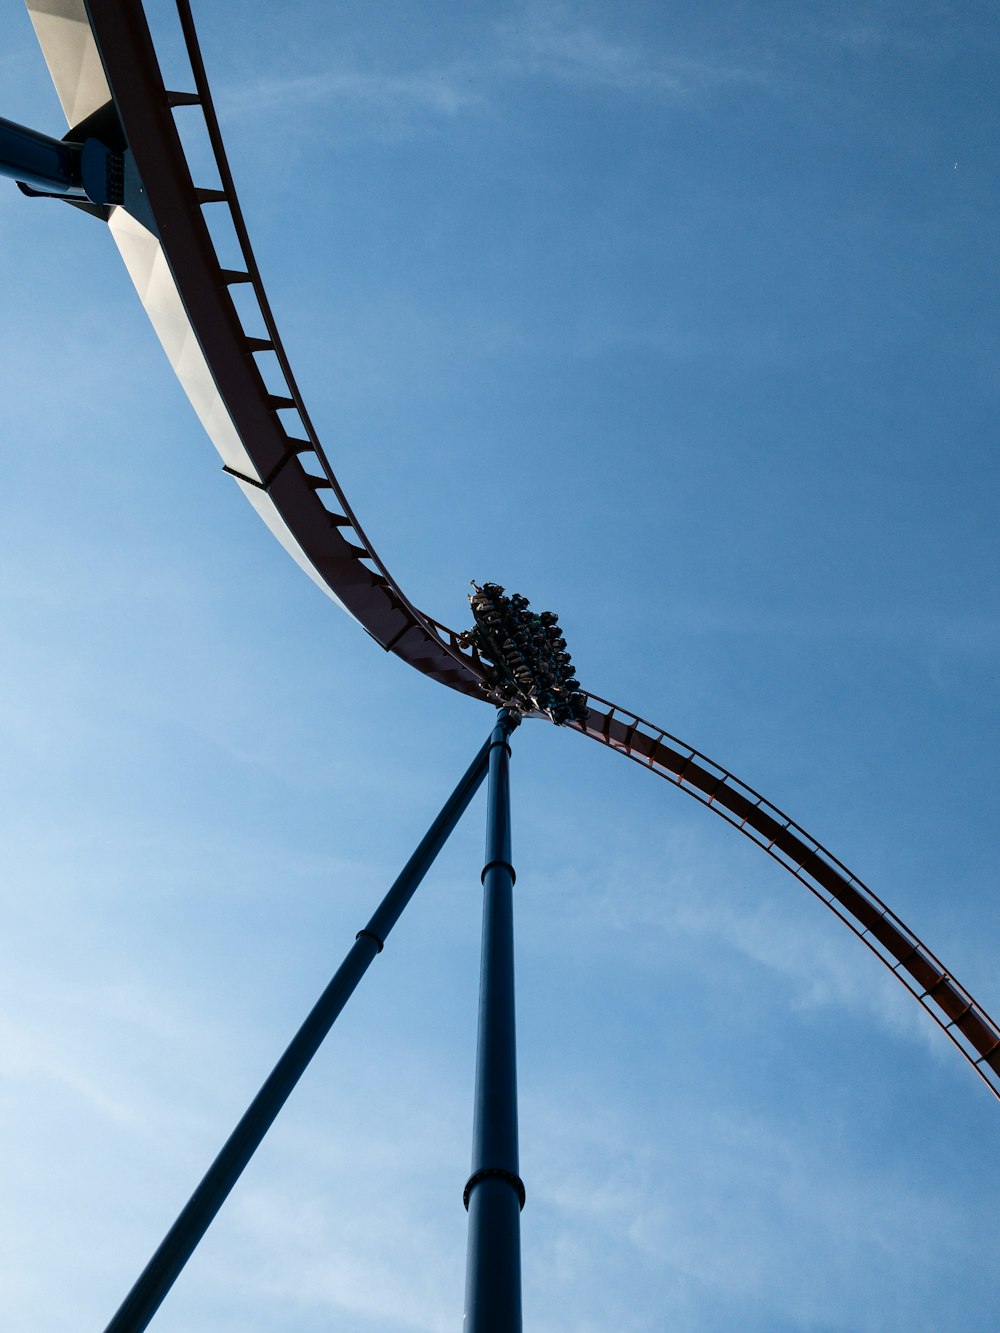 brown and black roller coaster under blue sky during daytime